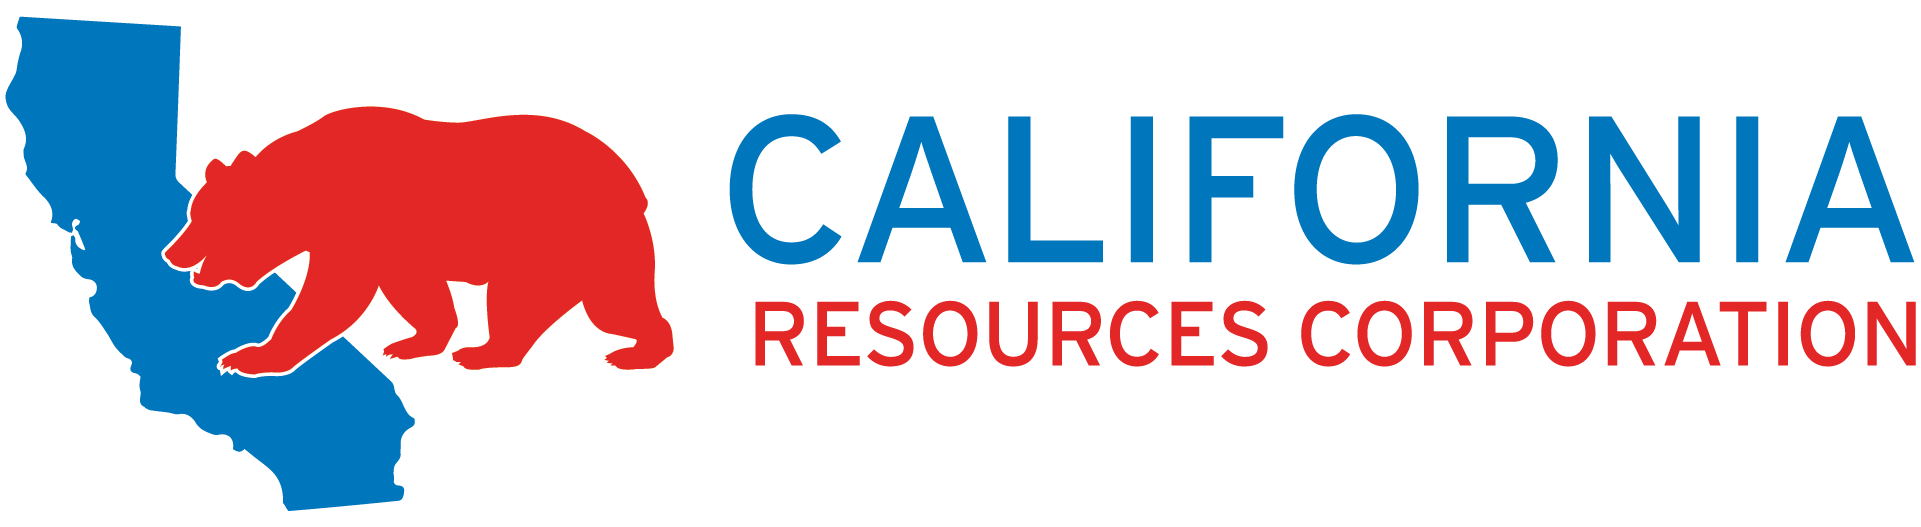 California Resources Corporation logo (1)